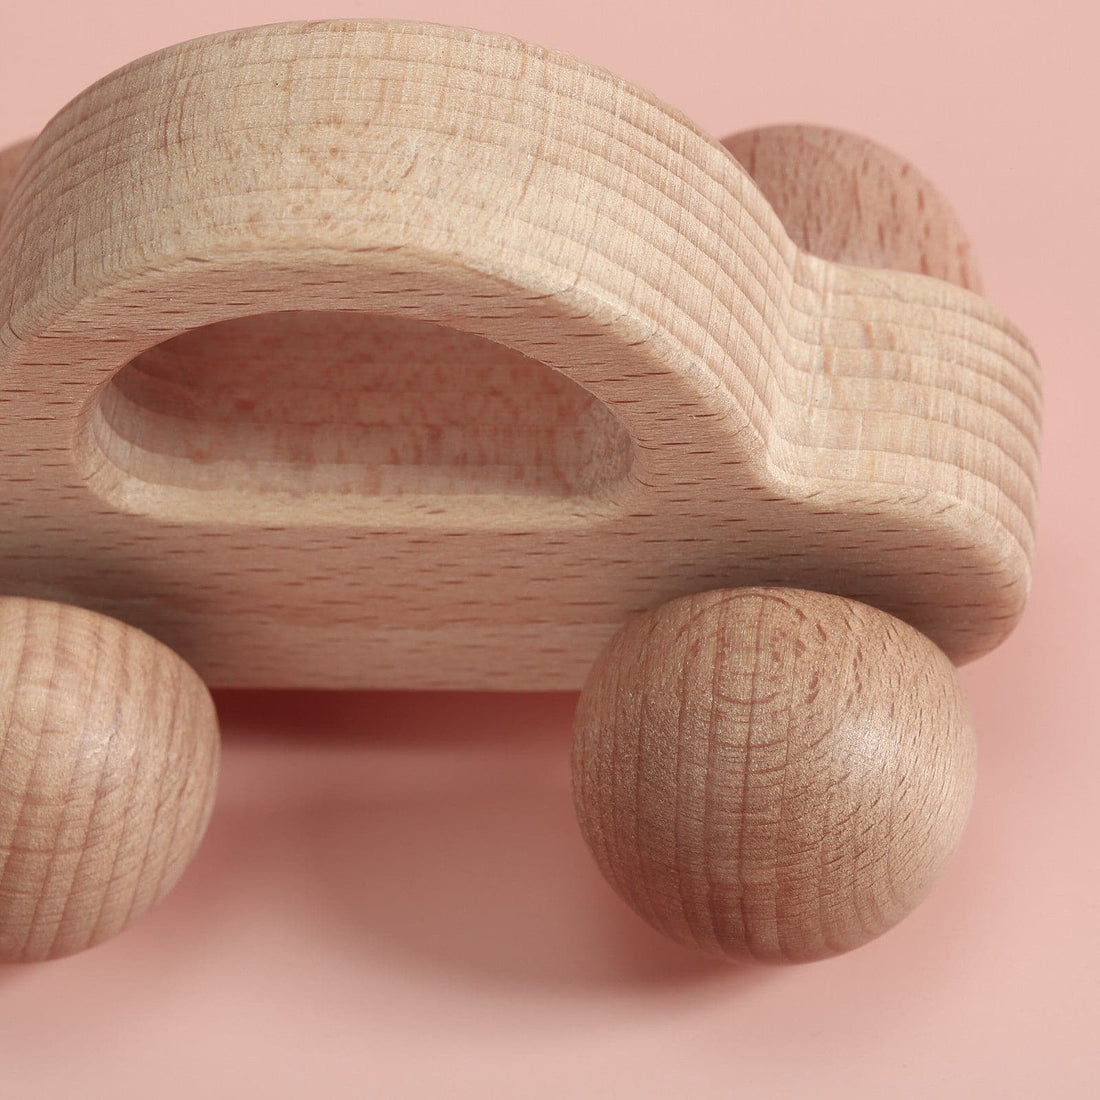 A Cute Car - Poco Wooden Toy - Pocotoys